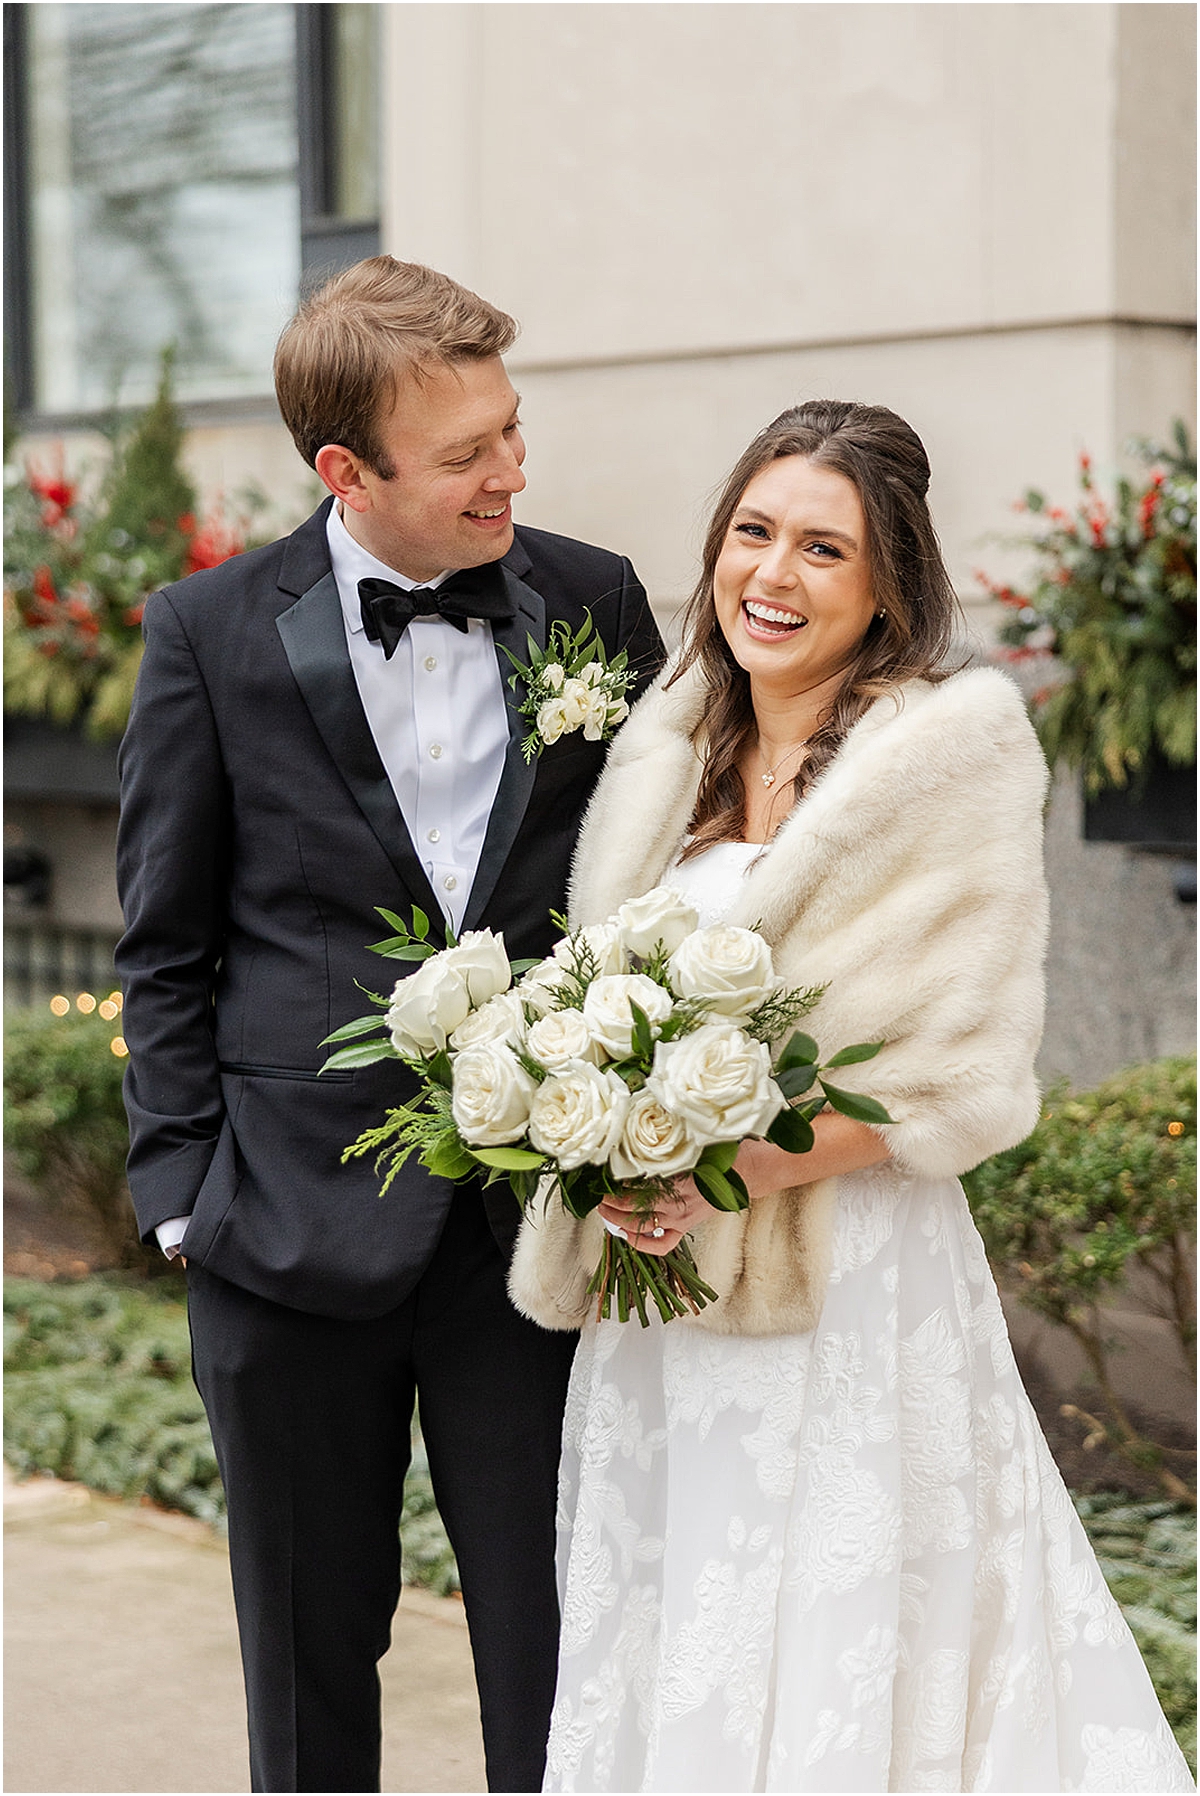 heartfelt and joyful wedding images from Elegant Chicago Winter Wedding at The Drake Hotel